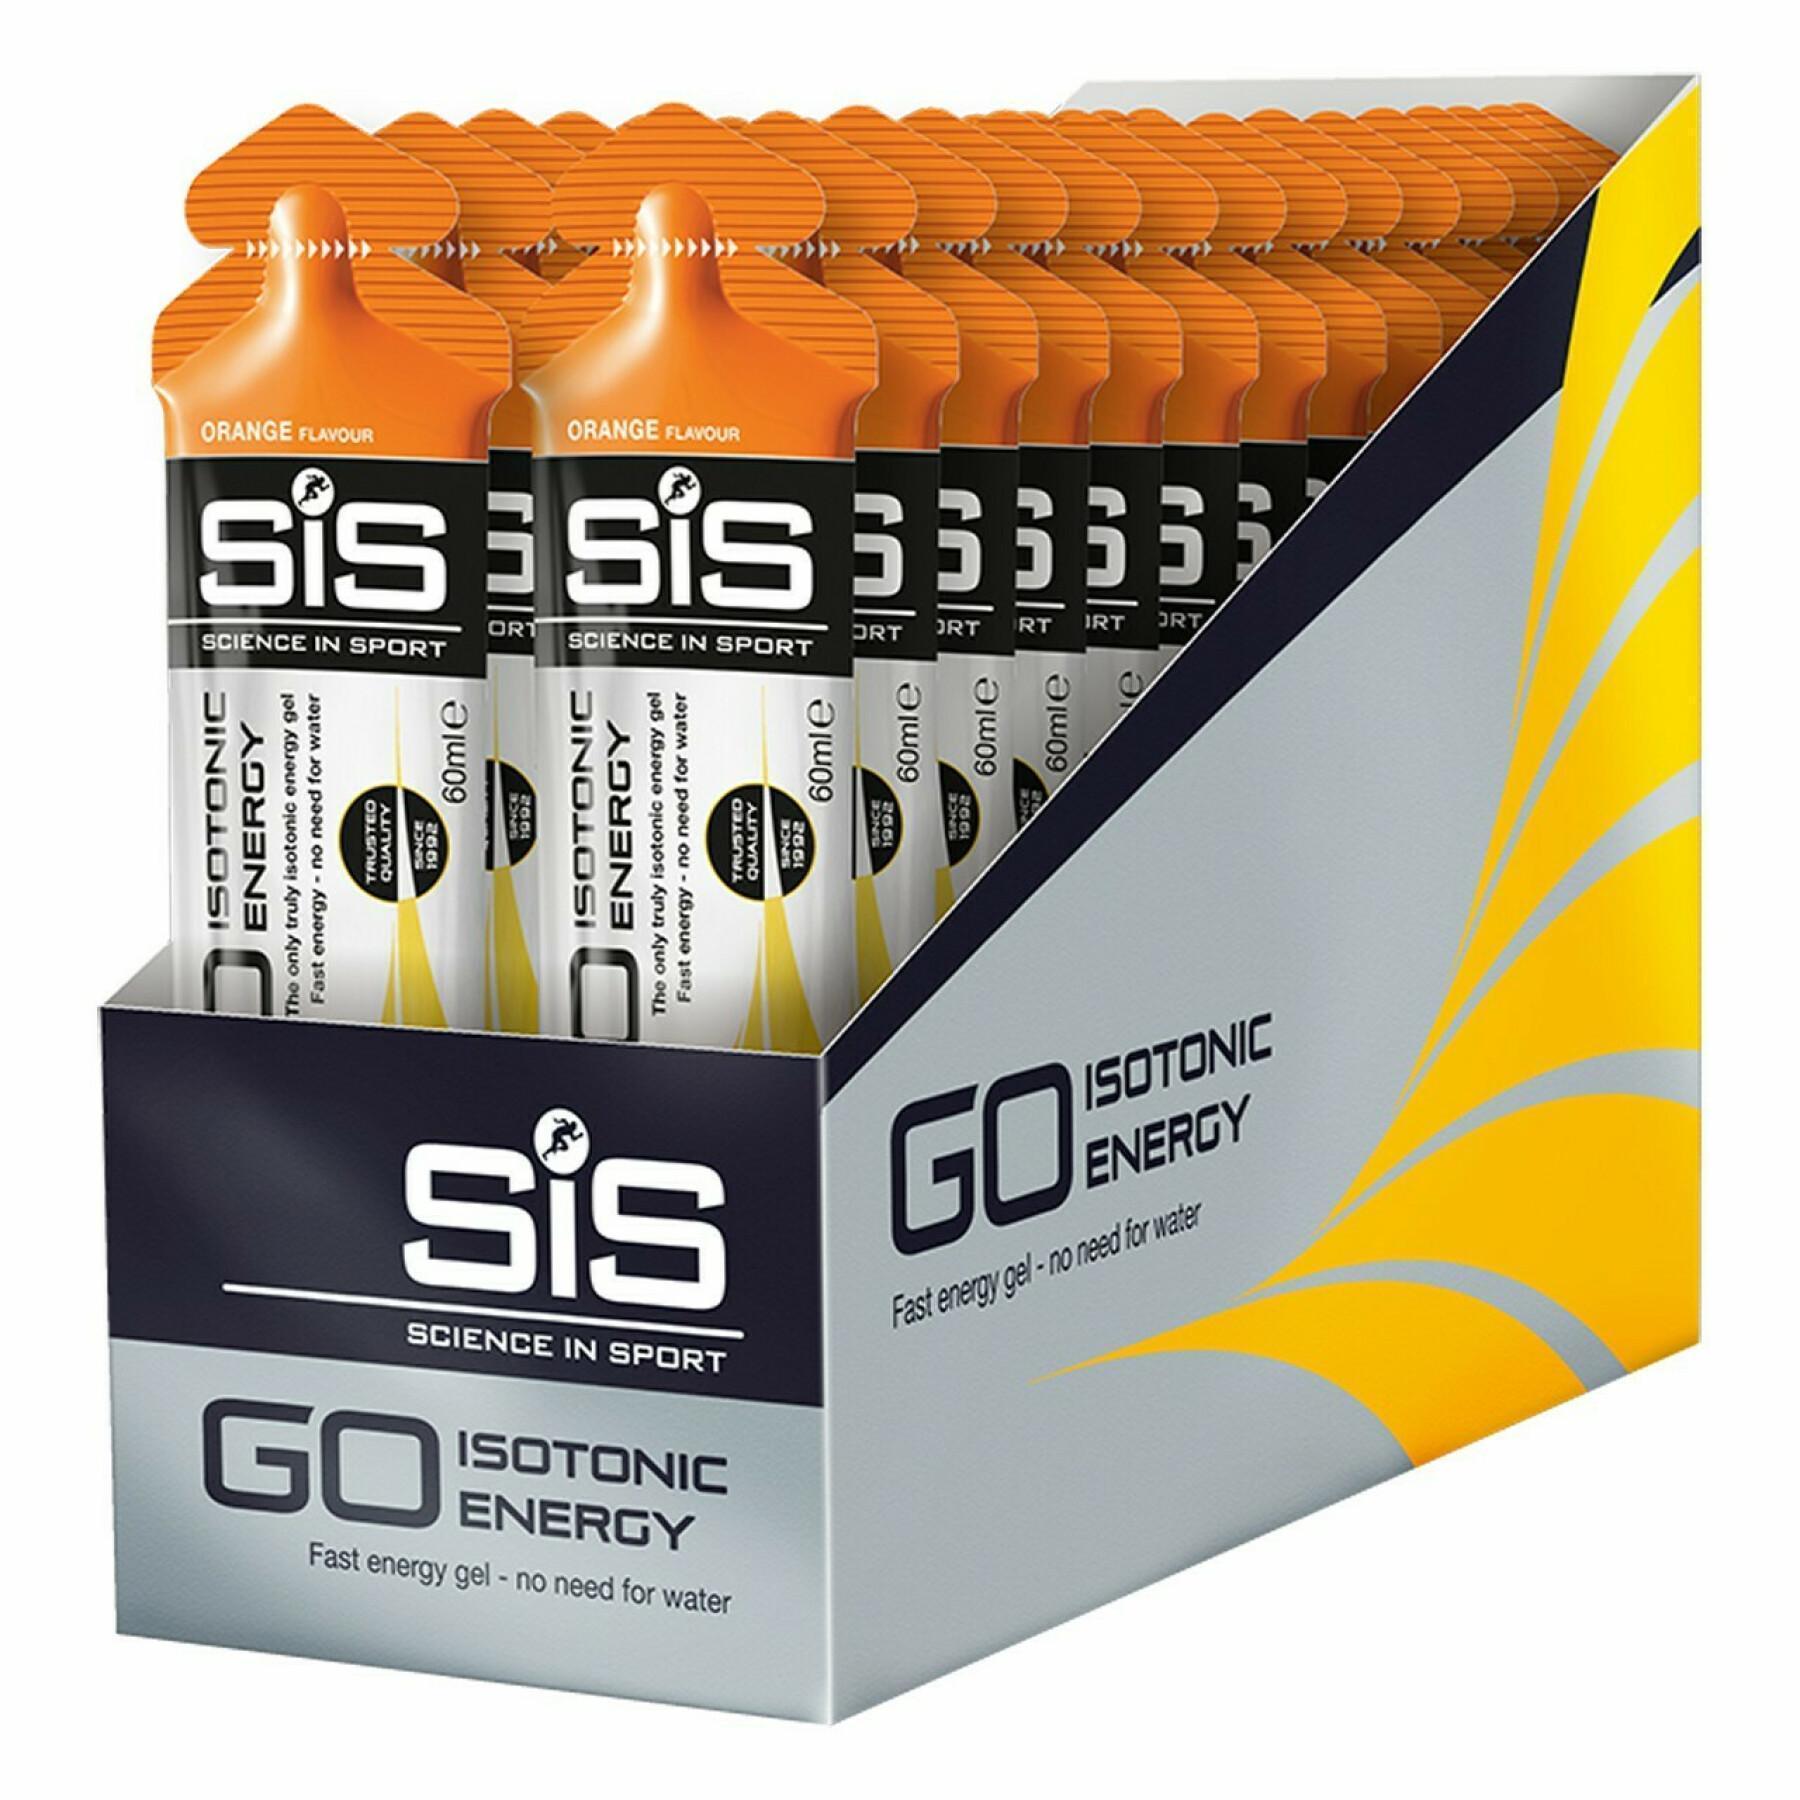 Pack of 30 energy gels Science in Sport Go Isotonic - Orange - 60 ml